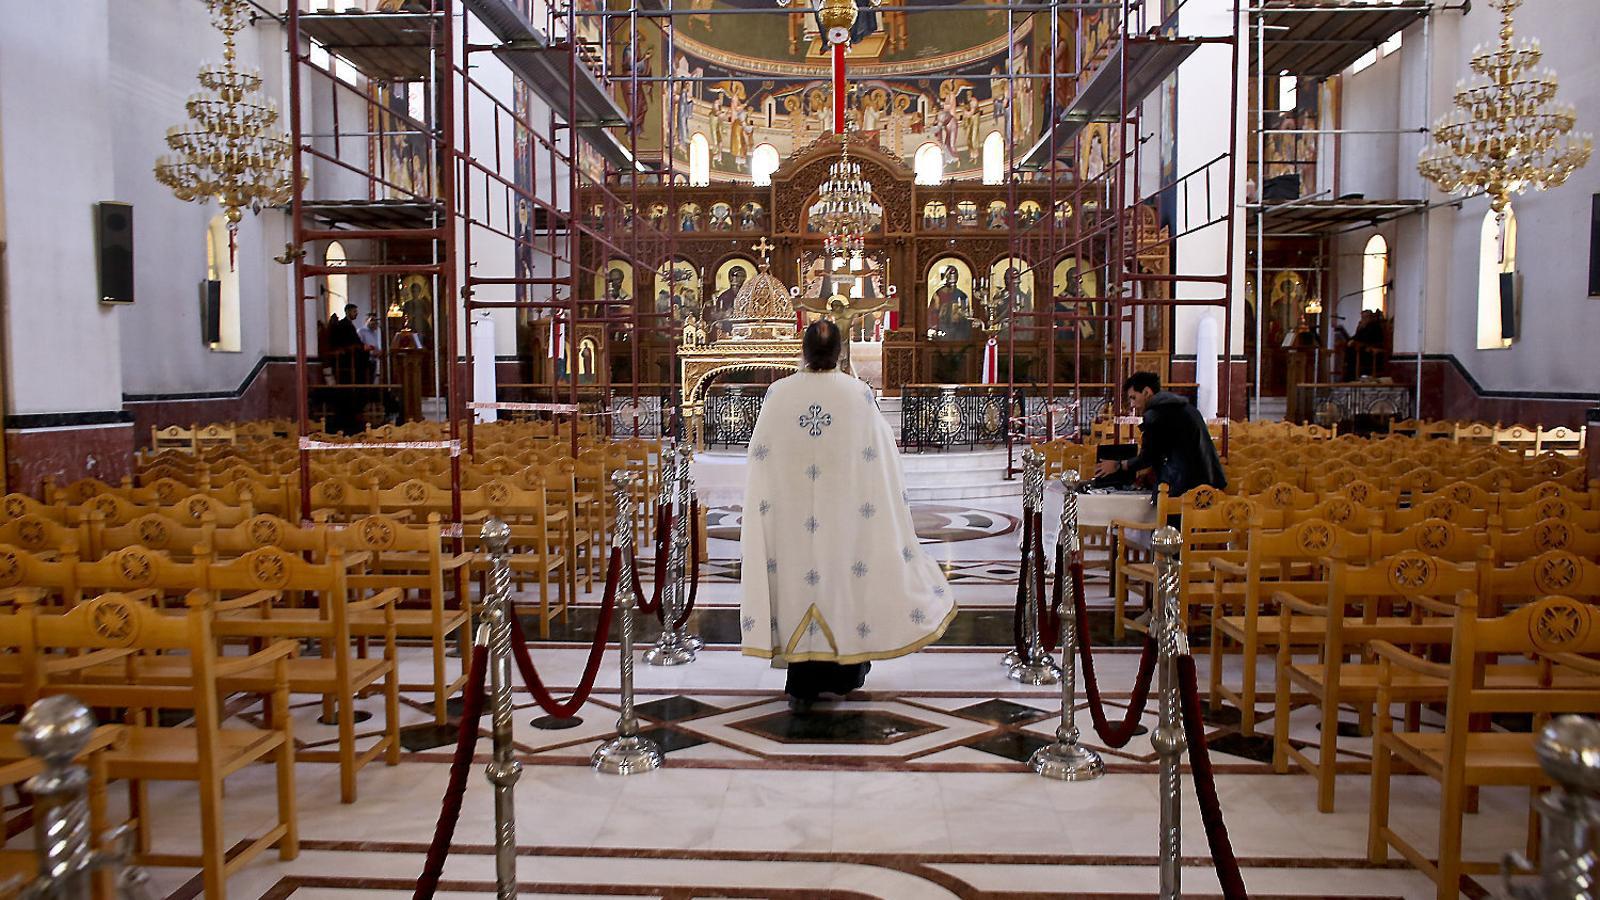 Una església ortodoxa d’Atenes buida per la pandèmia. / MILOS BICANSKI / GETTY